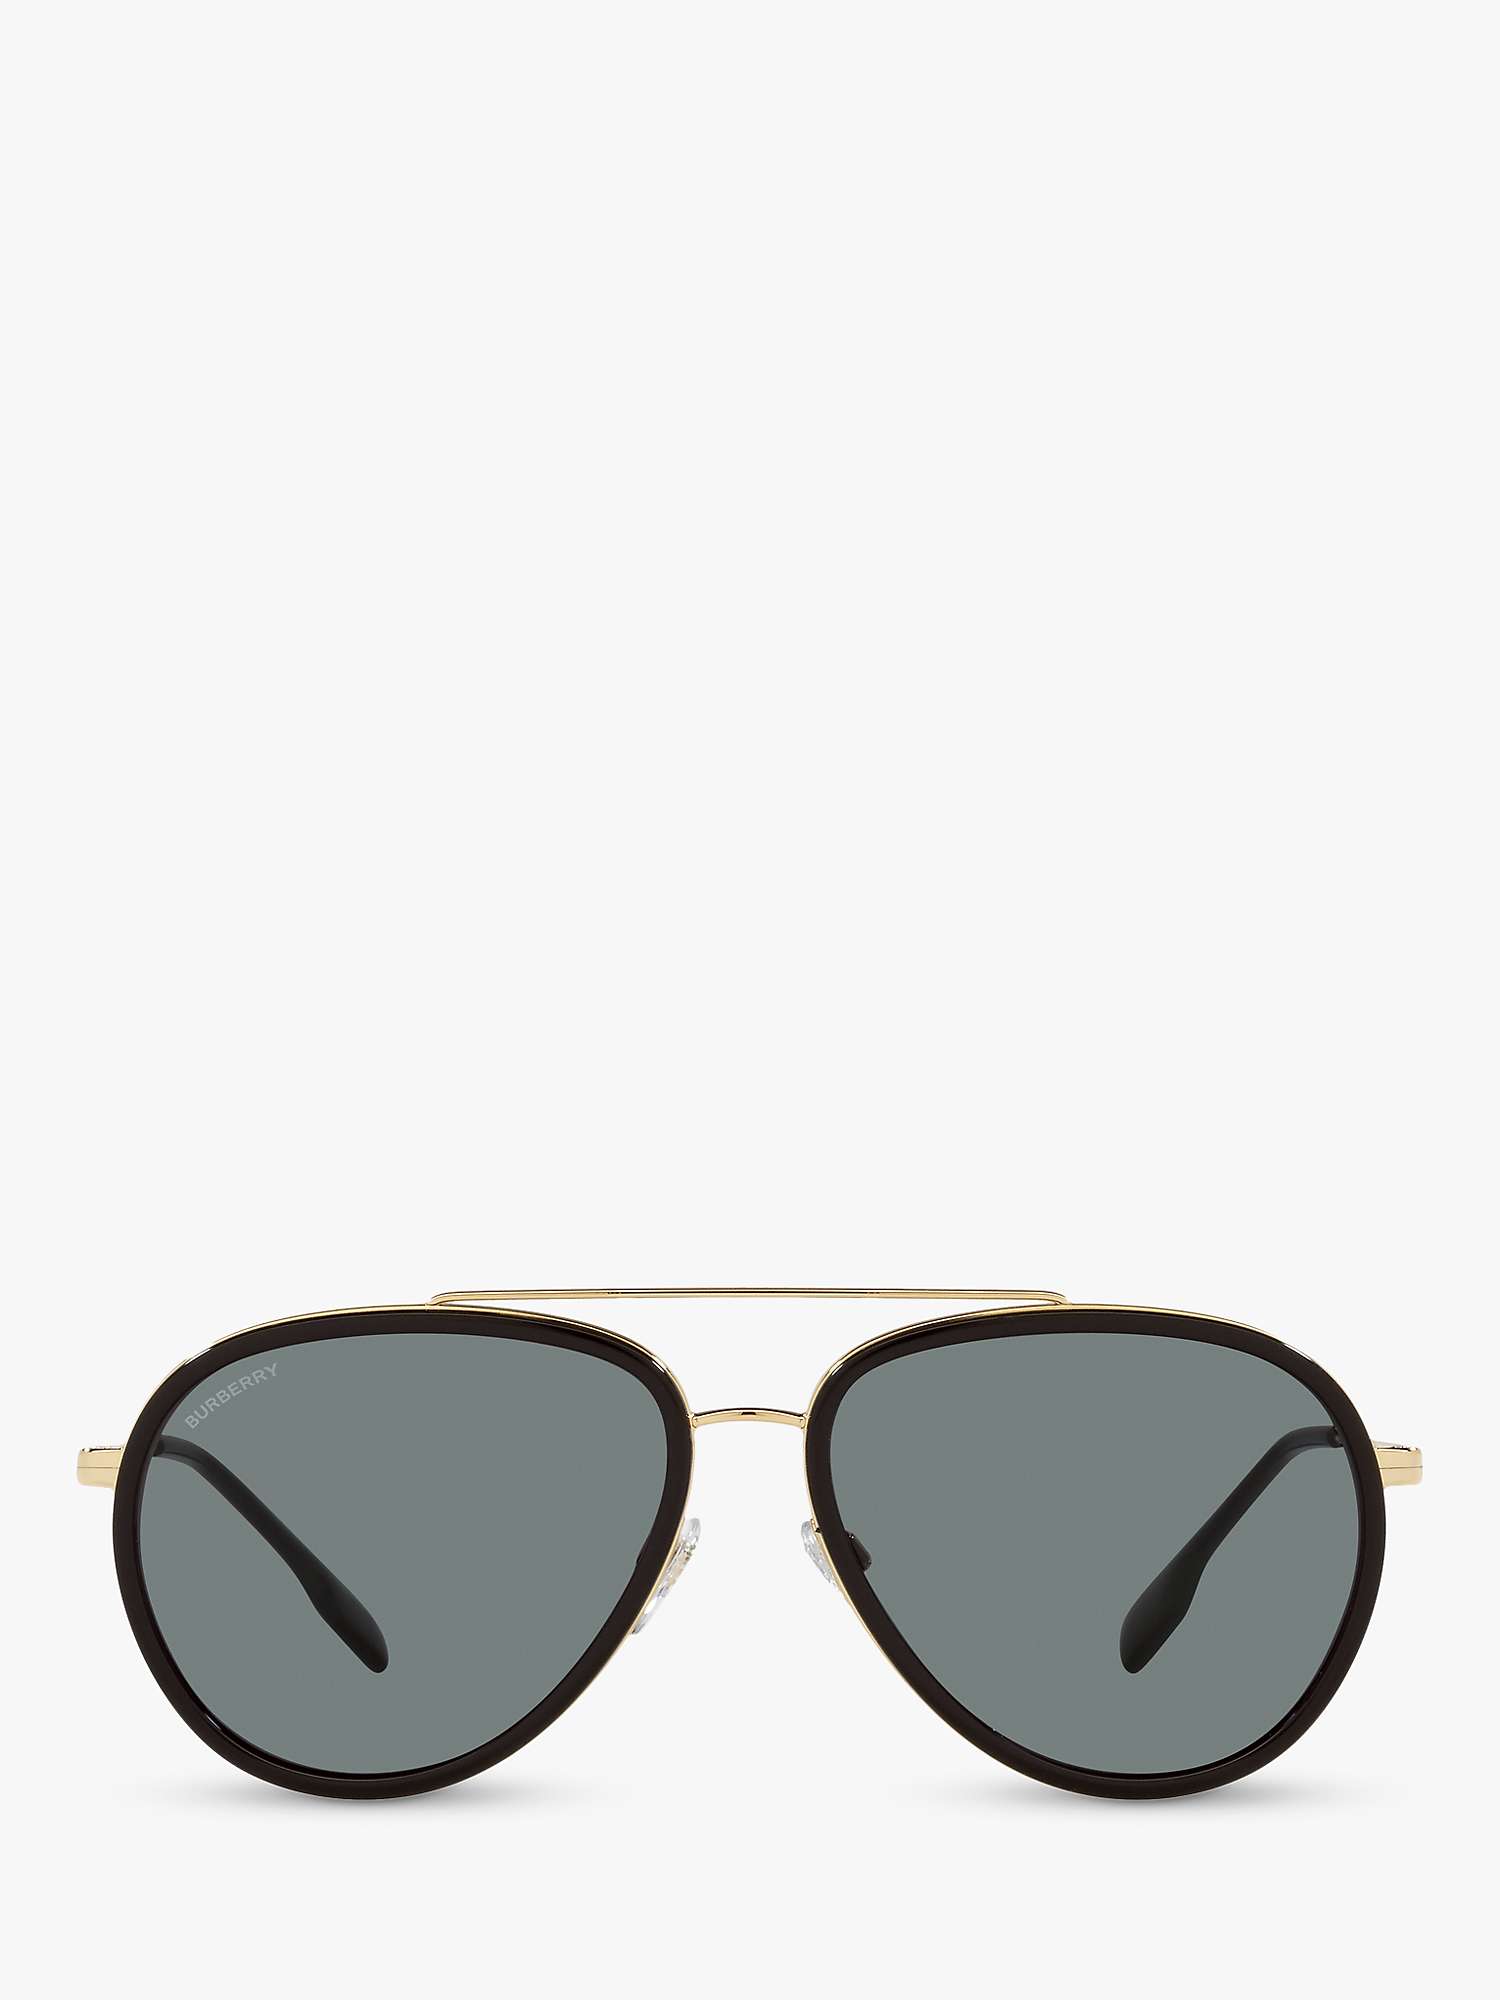 Buy Burberry BE3125 Men's Oliver Polarised Aviator Sunglasses, Gold/Grey Online at johnlewis.com